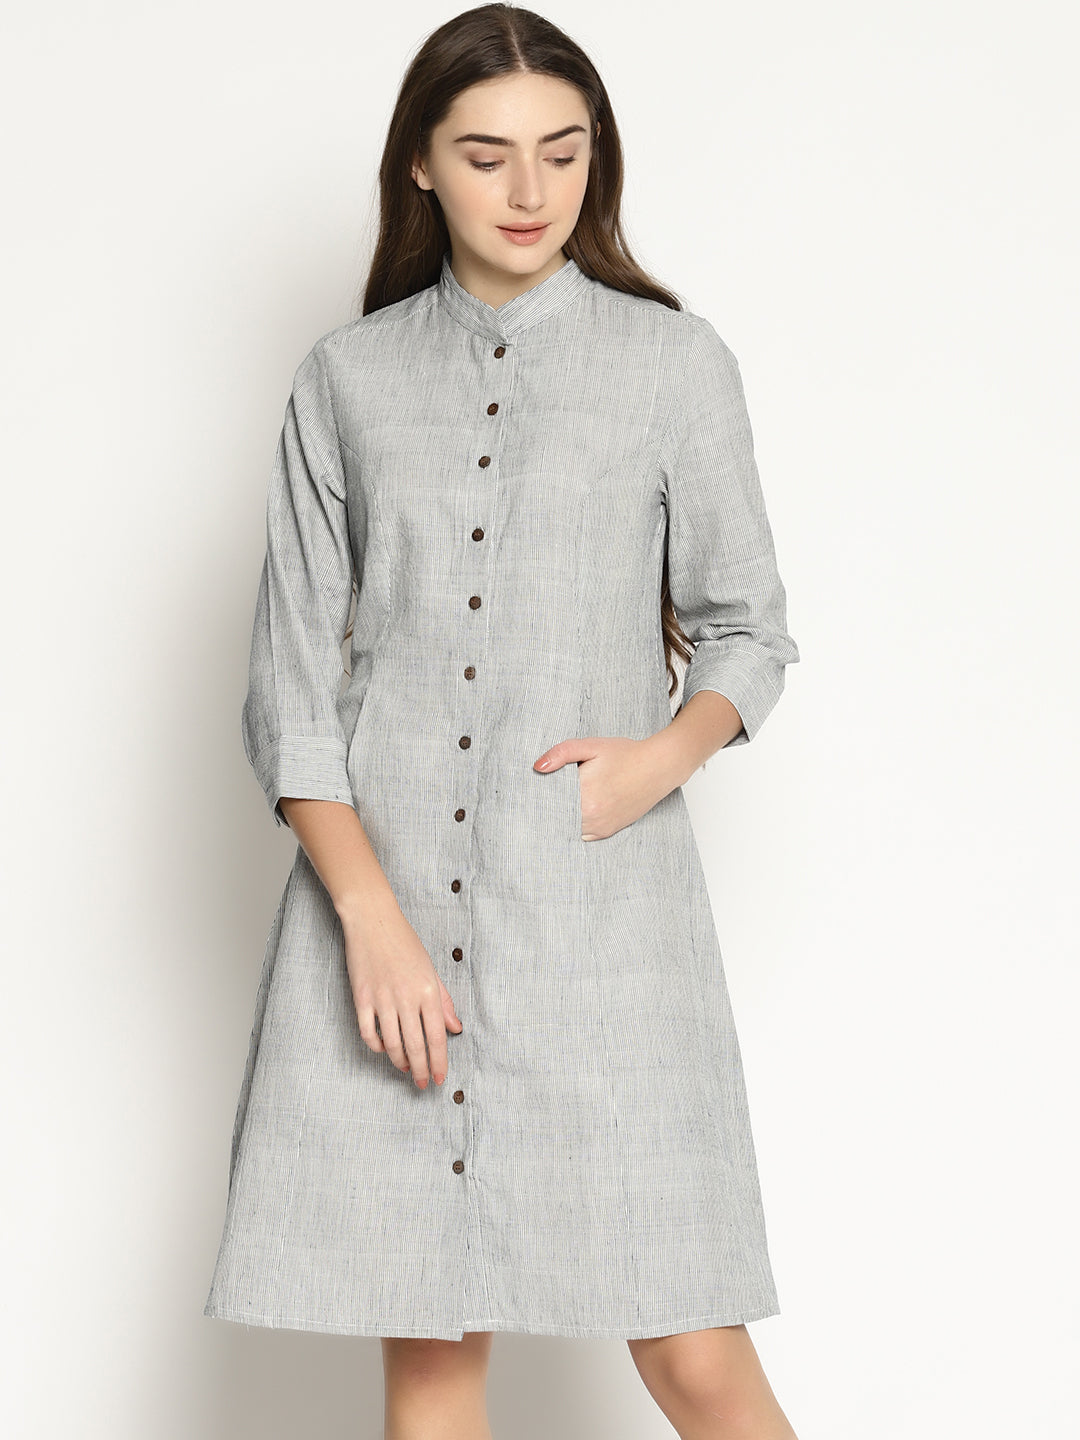 Khadi Stripes Dress - Studio Y - Organic Cotton Tunic